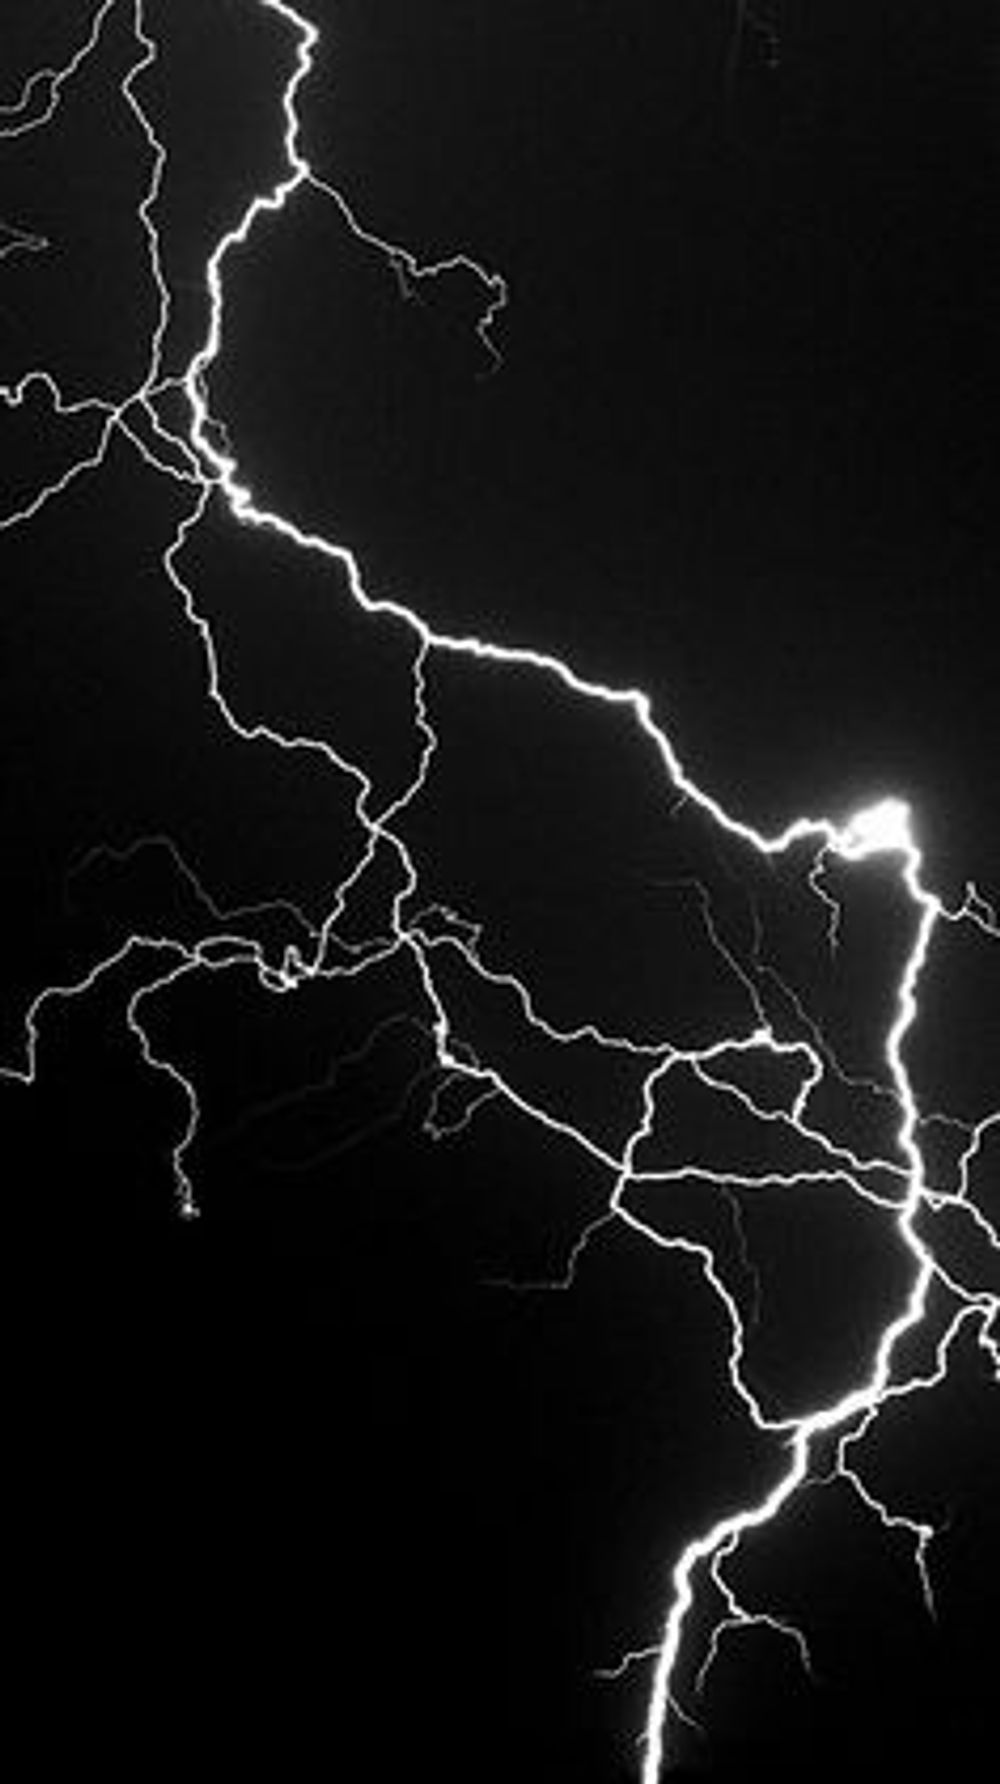 Lightning in the sky - Storm